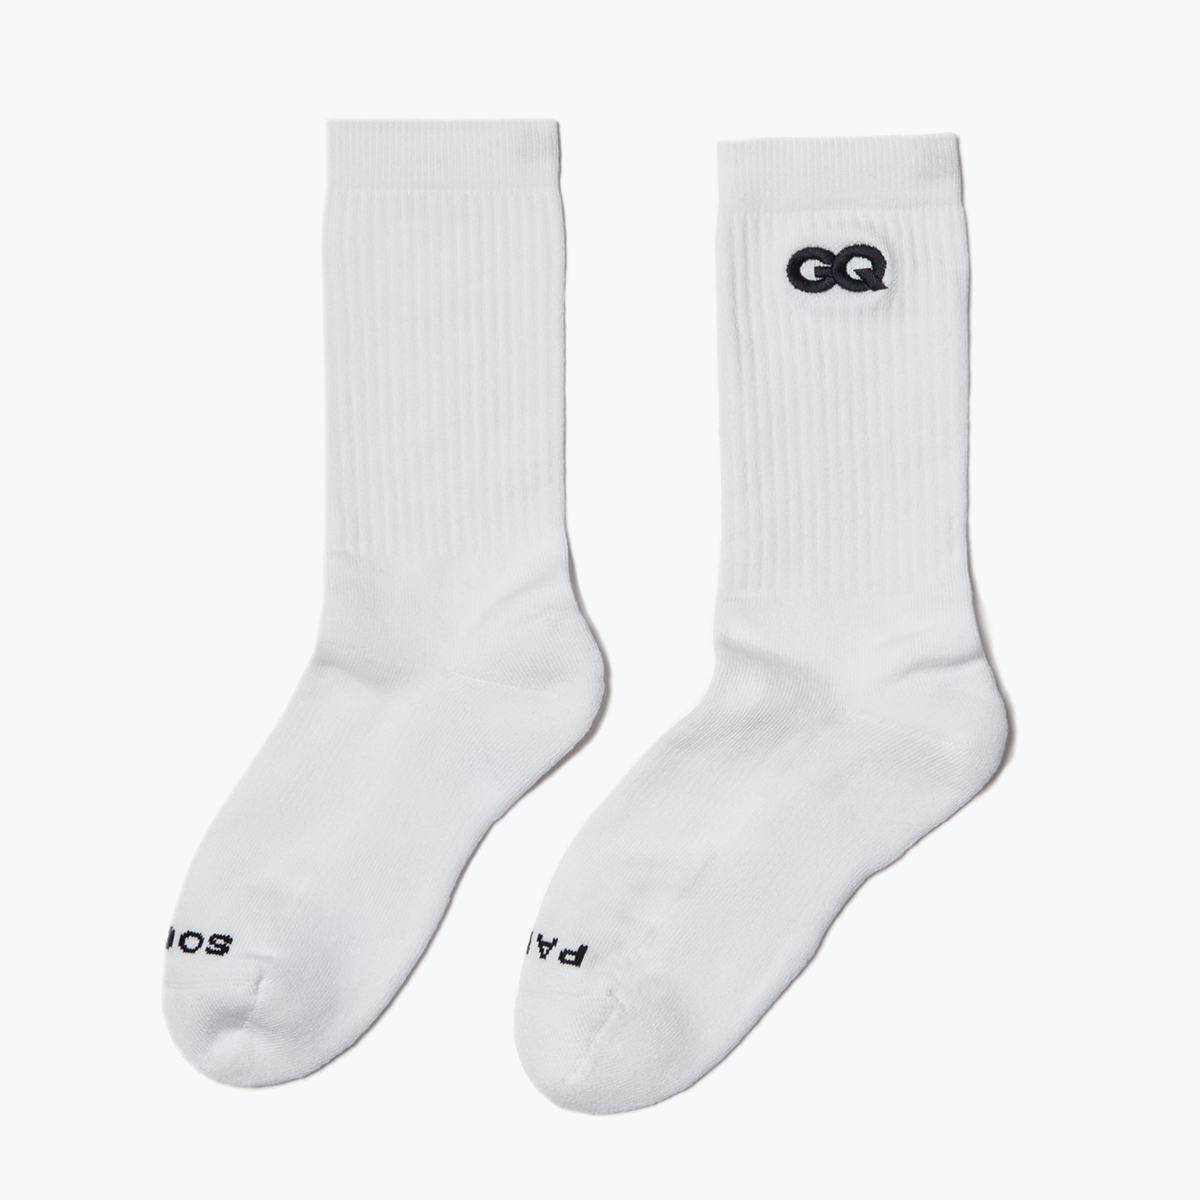 GQ Party-Socken, Weiß Gr. M